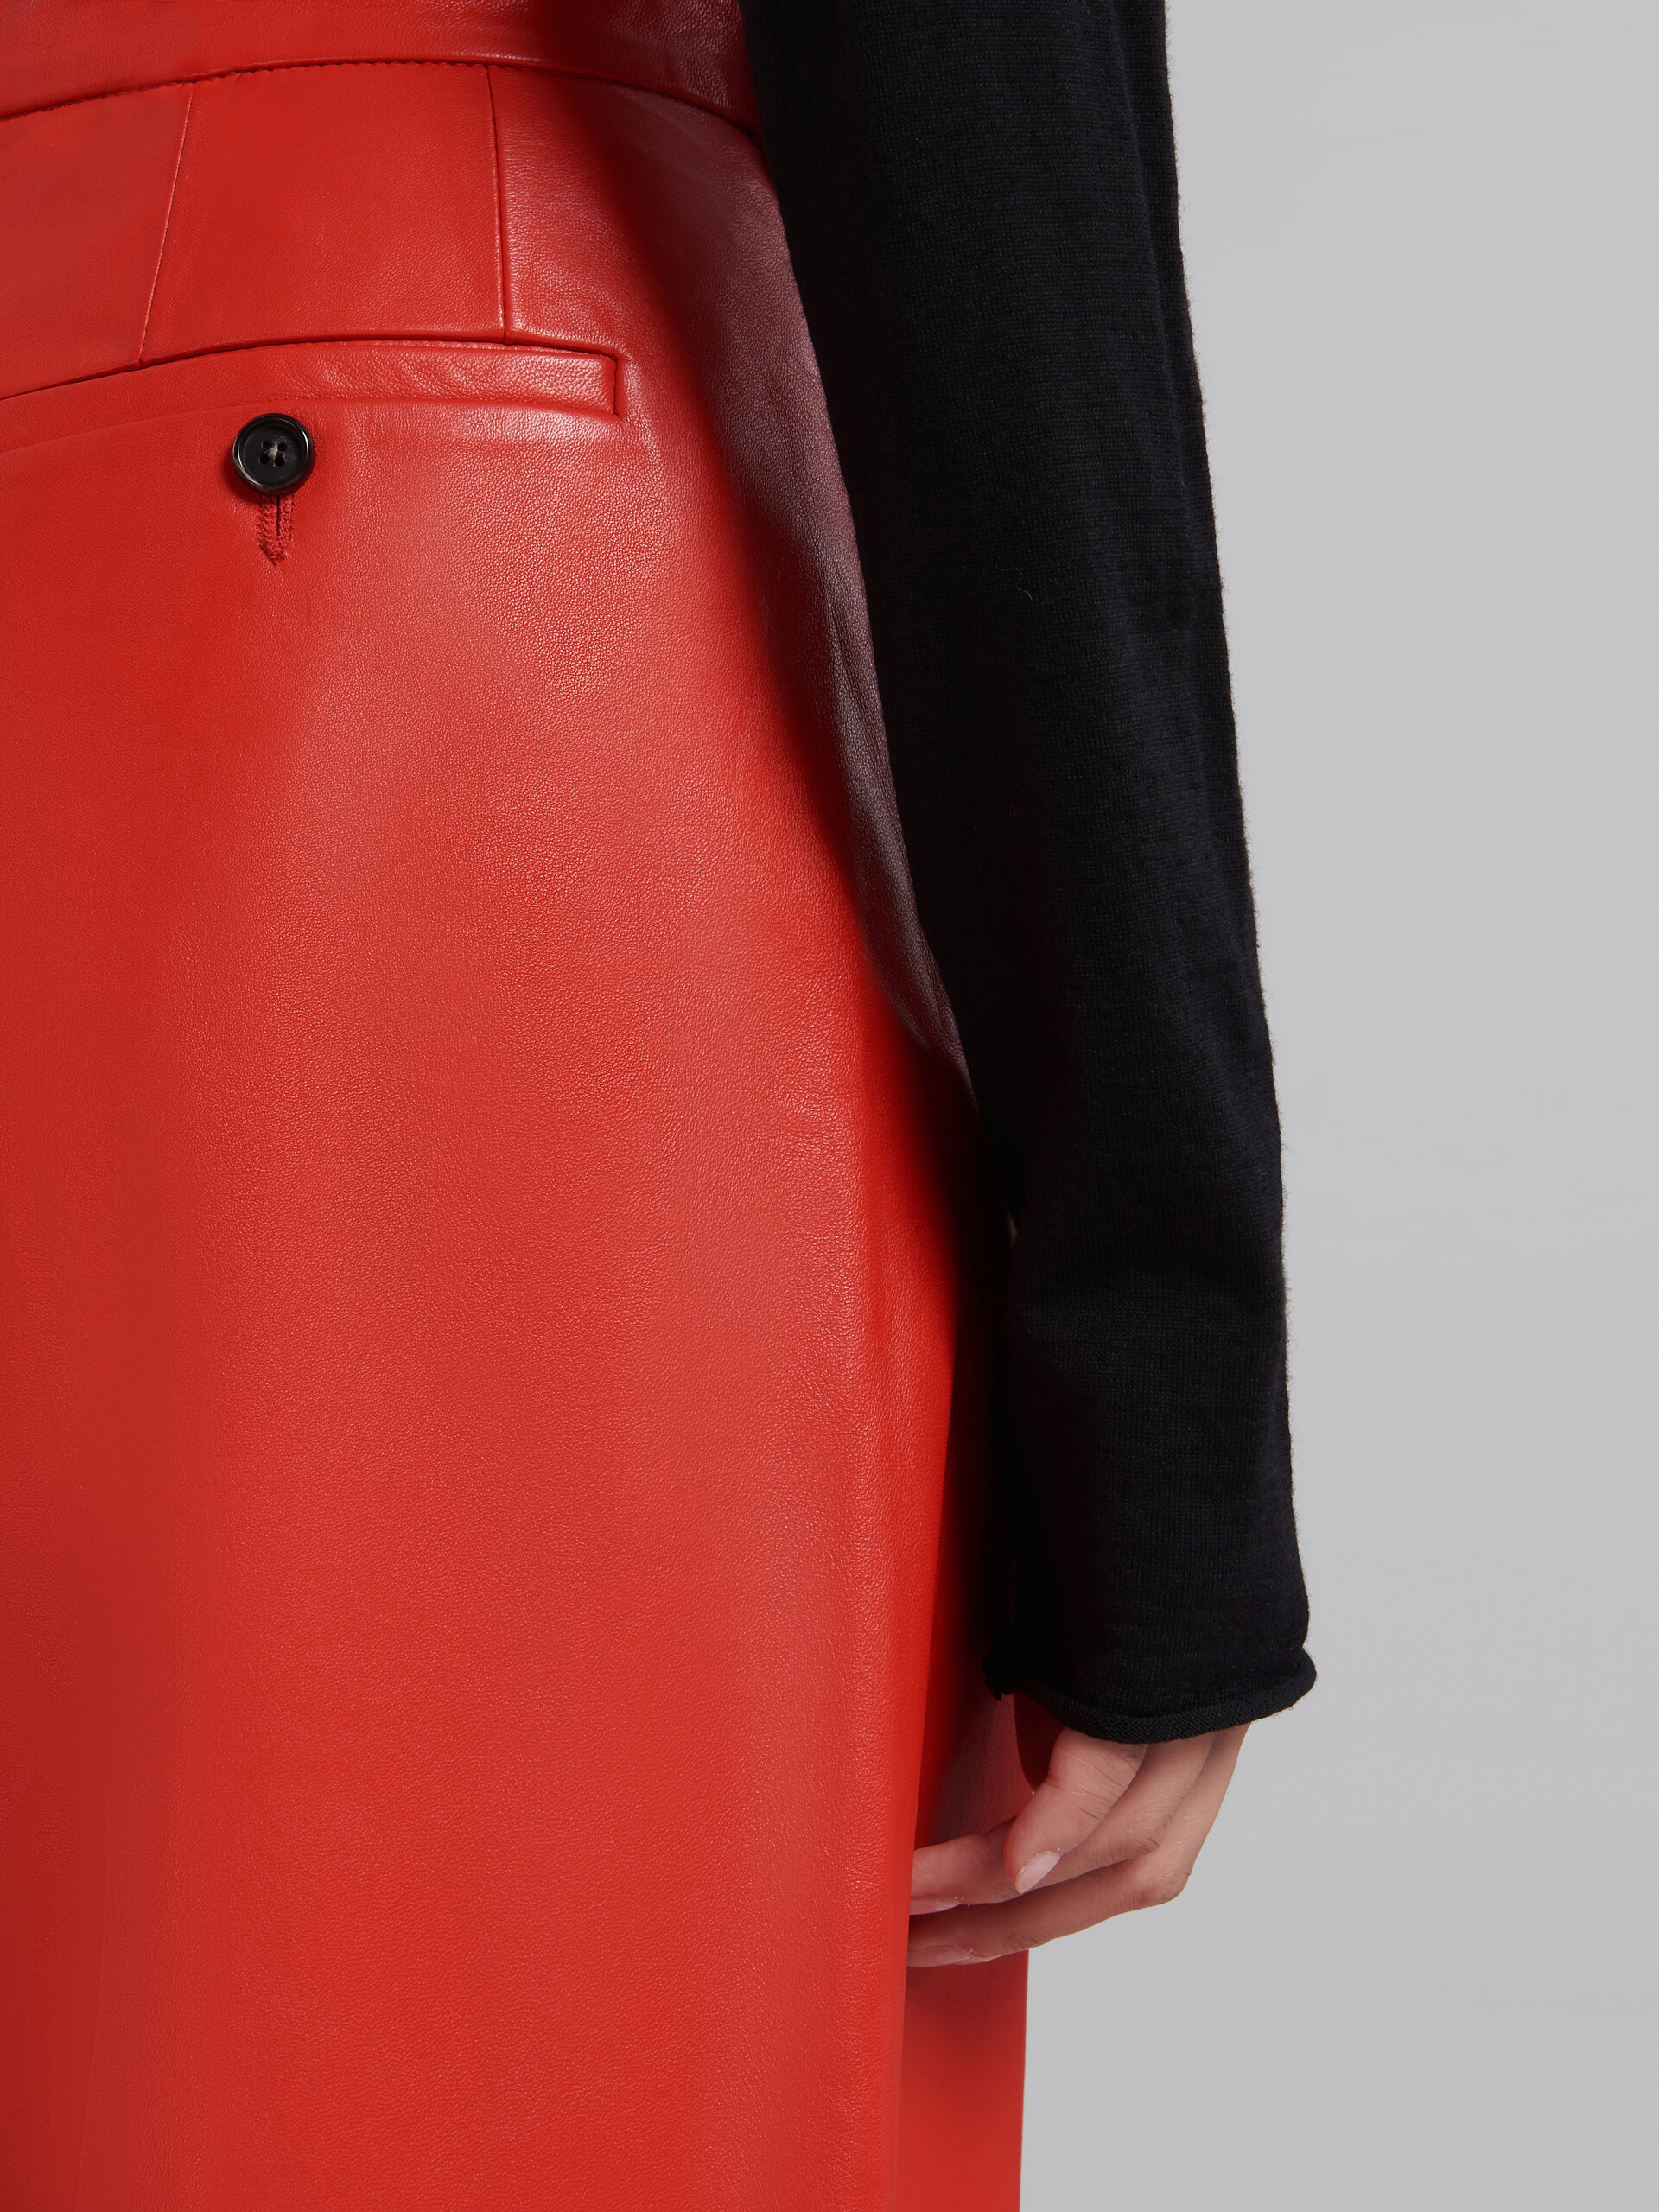 Pantaloni sartoriali in nappa rossa - Pantaloni - Image 4